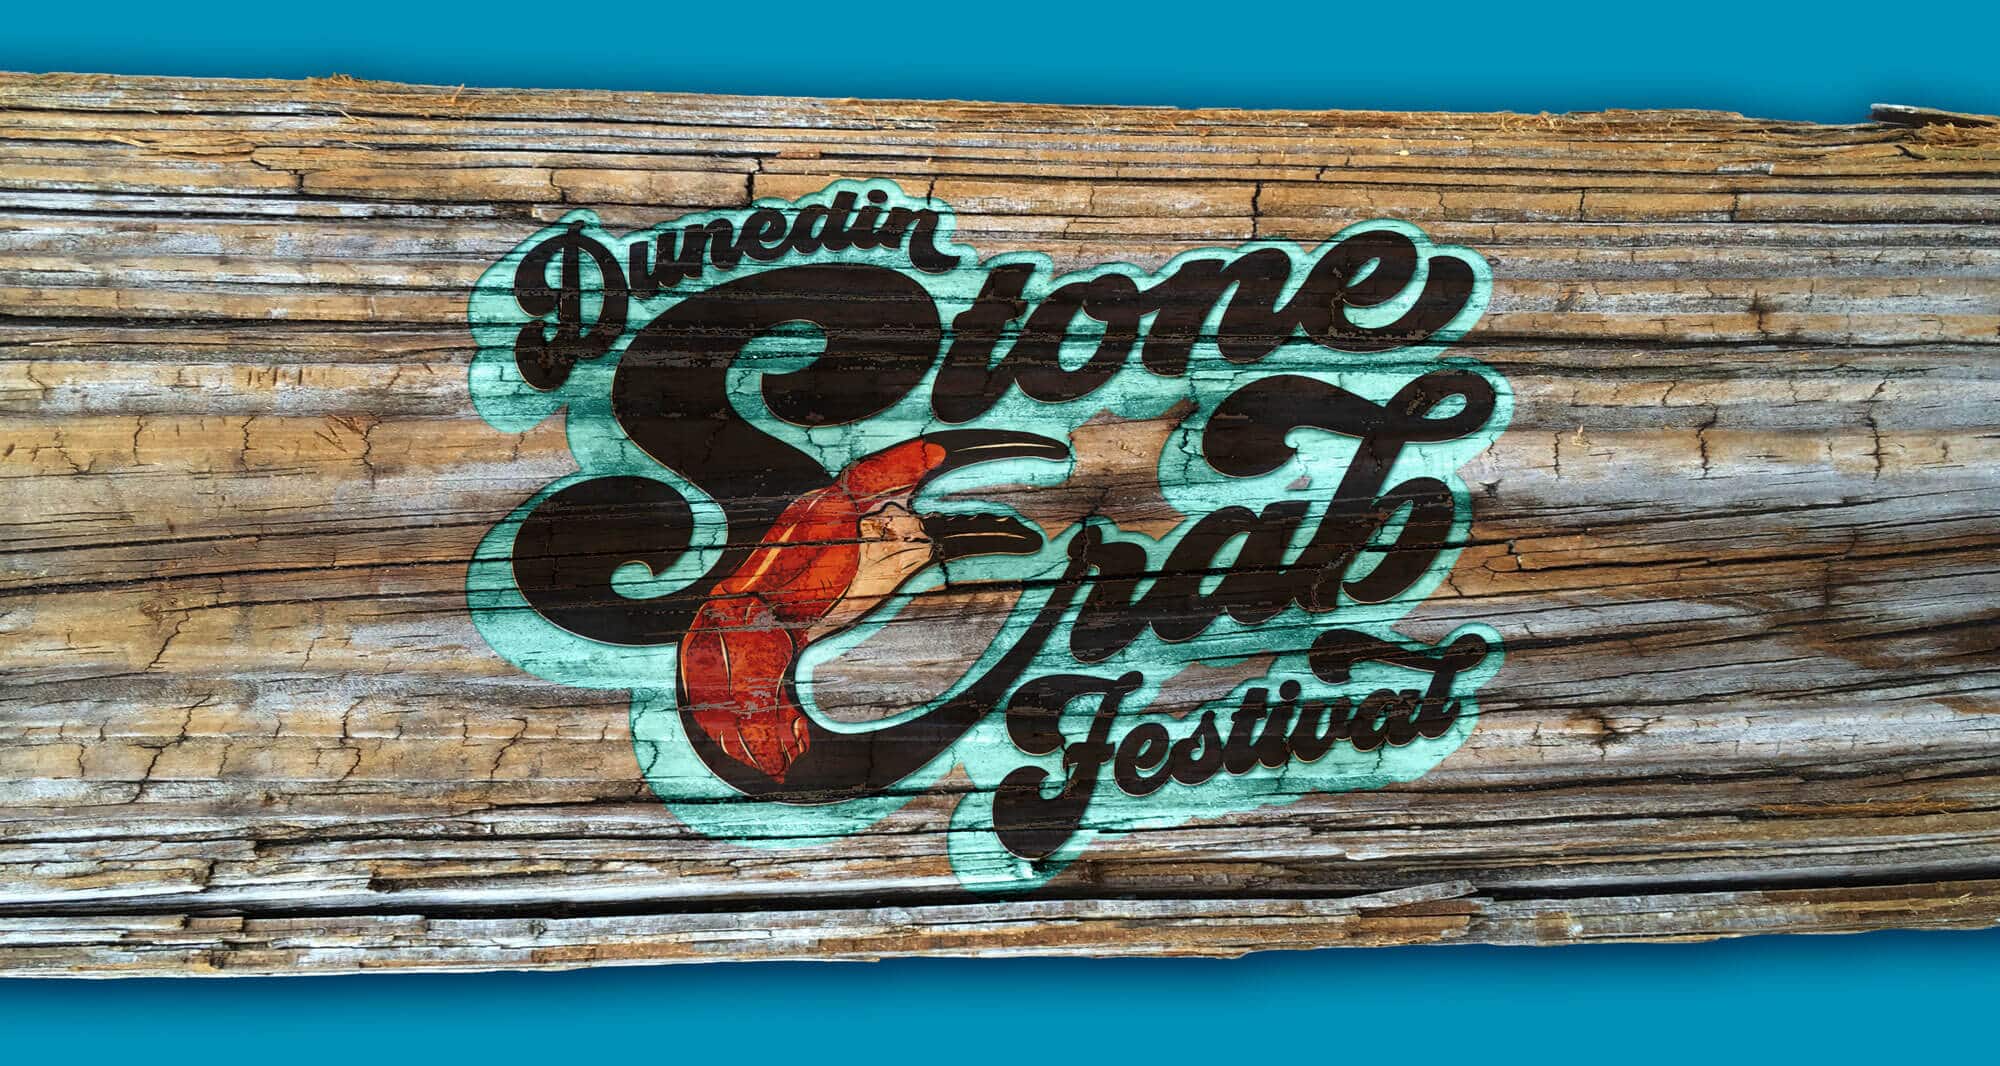 Stone Crab Fest Oct 2021 Dunedin Stone Crab Festival